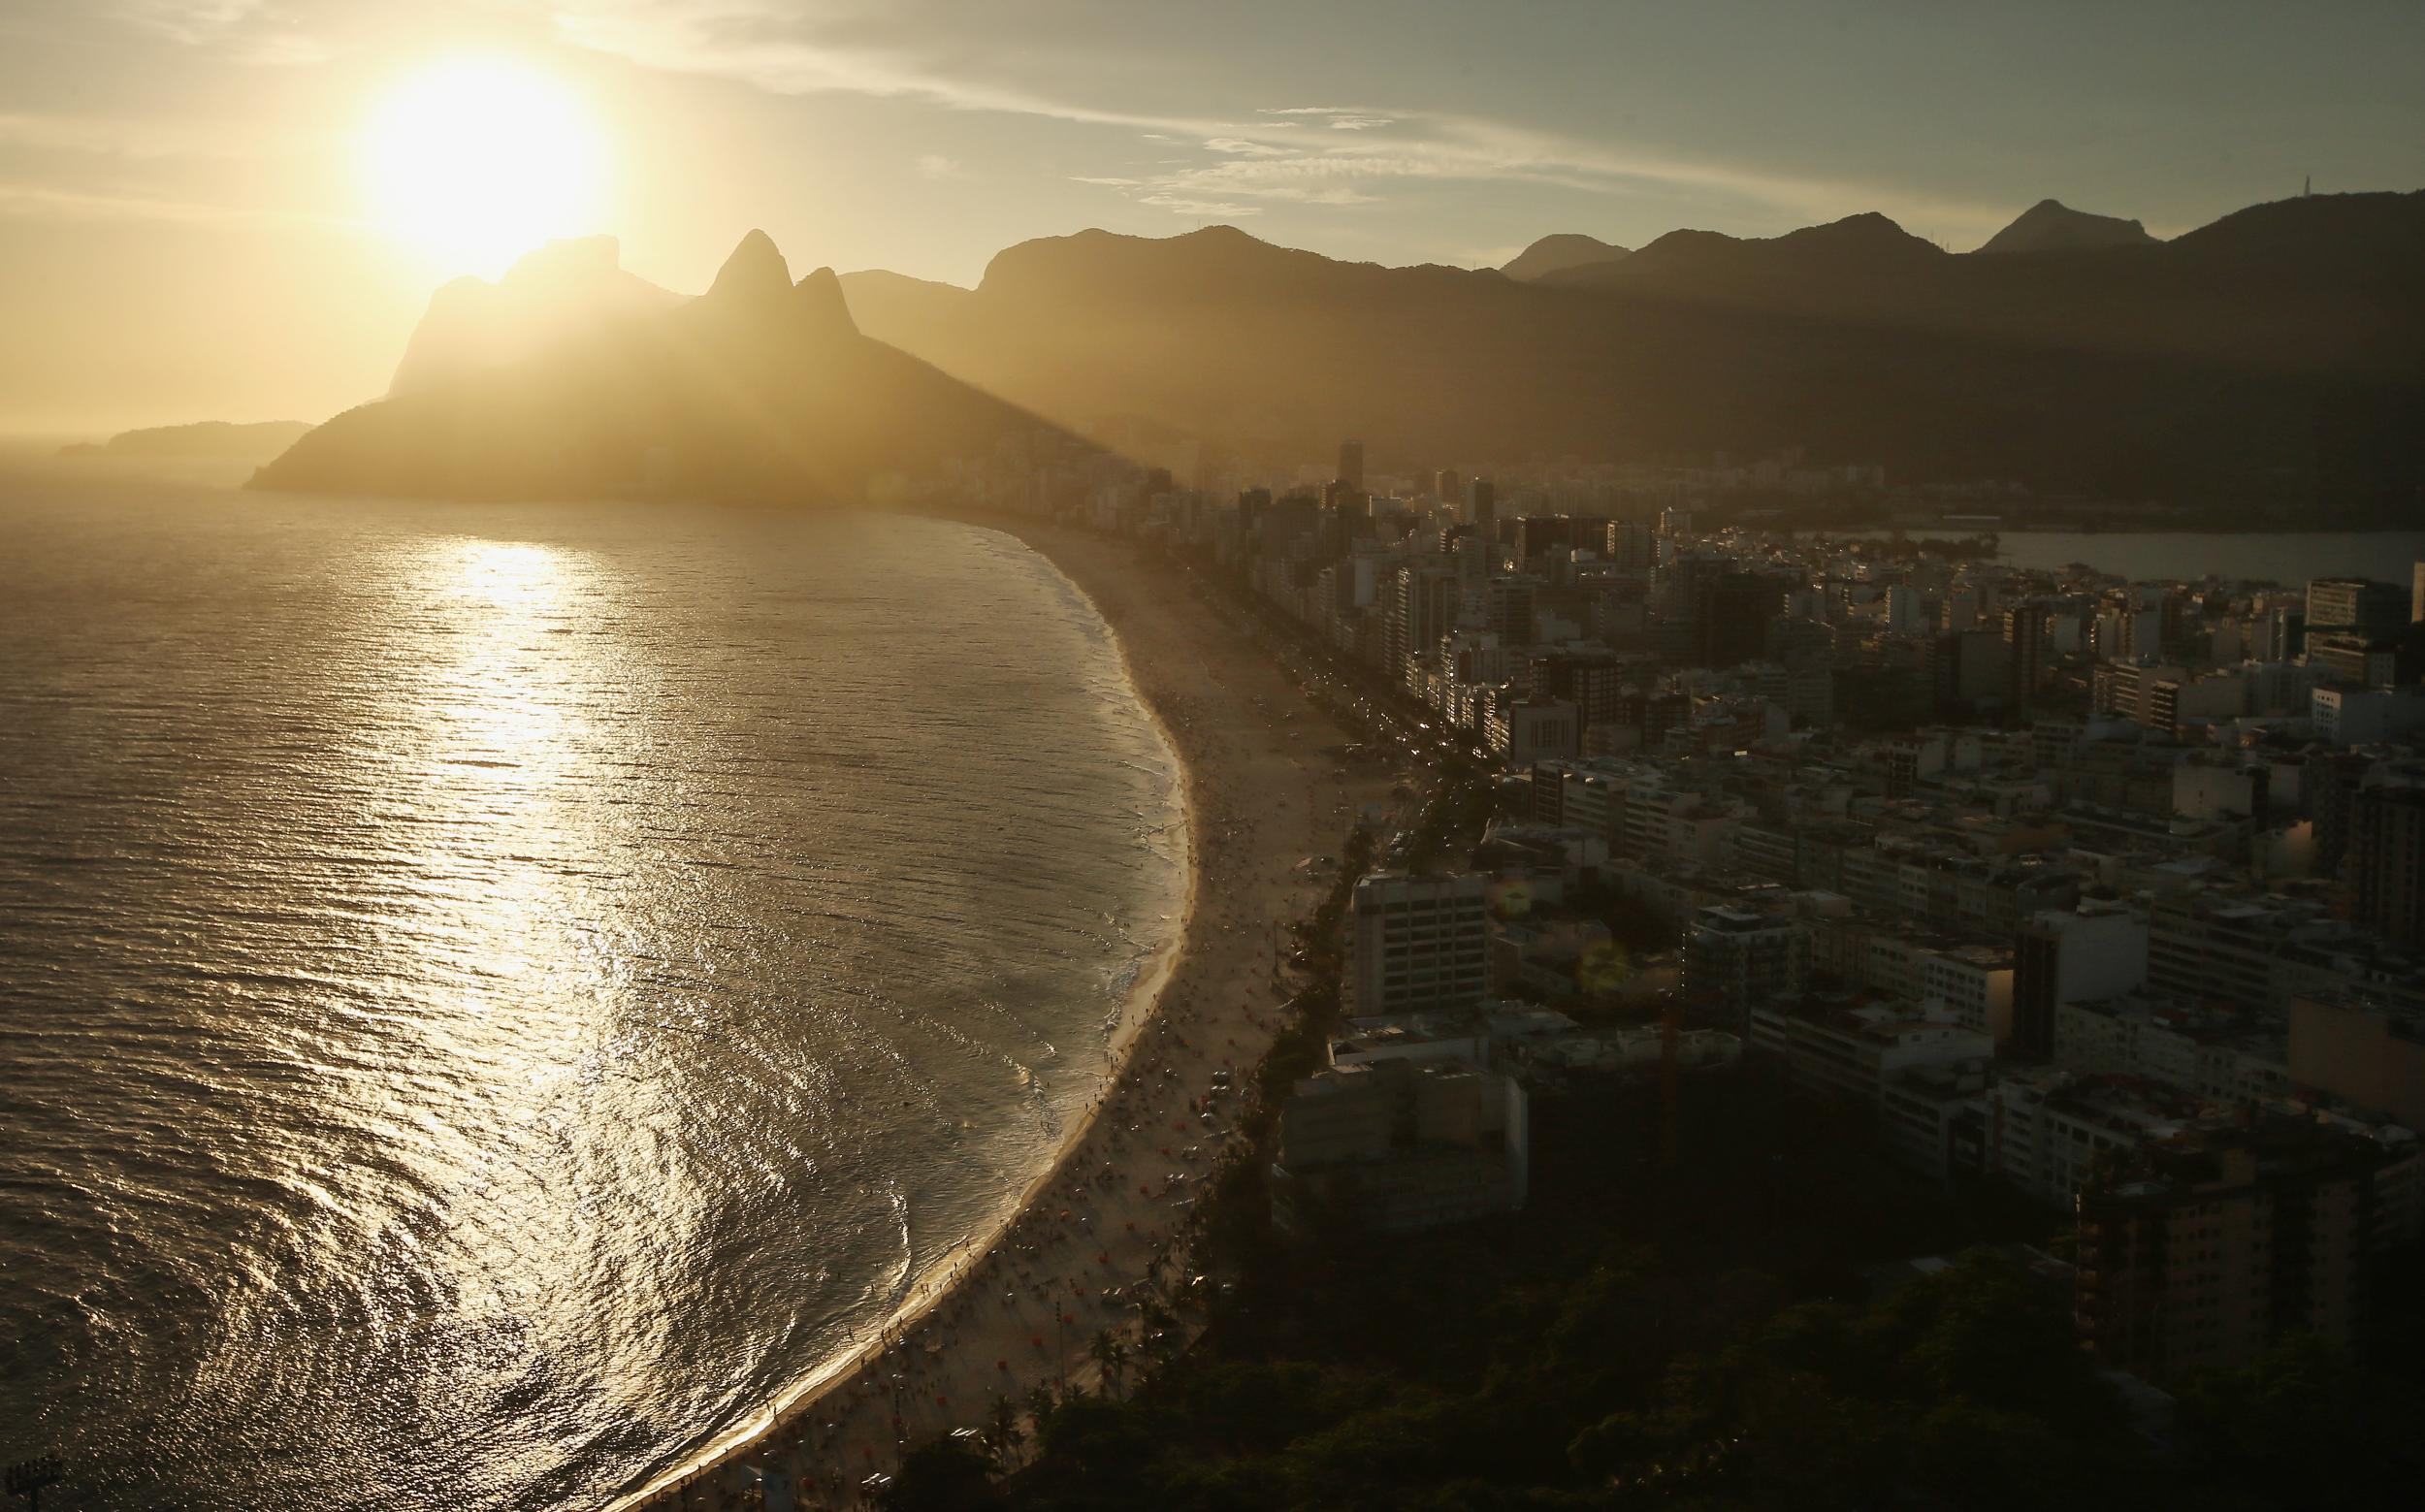 Flight prices to Rio have fallen dramatically